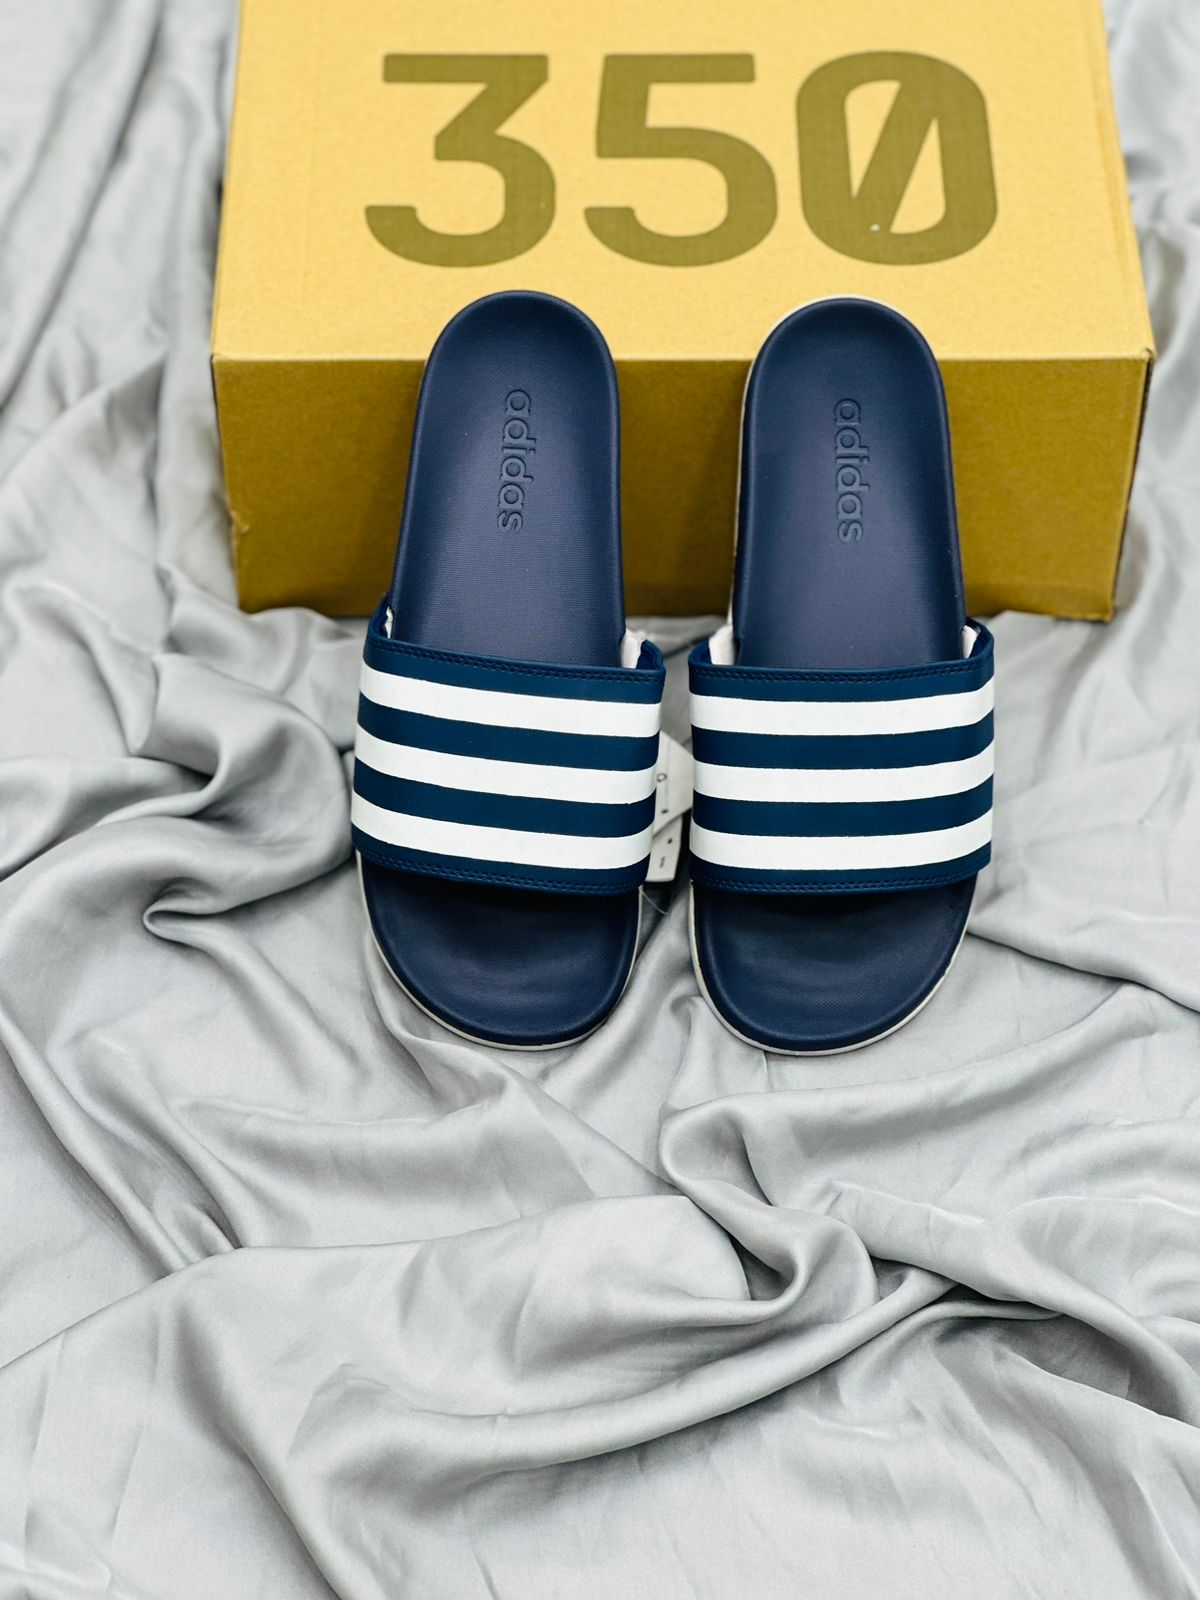 Adidas adilitte Slides Three Stripes - Blue and White